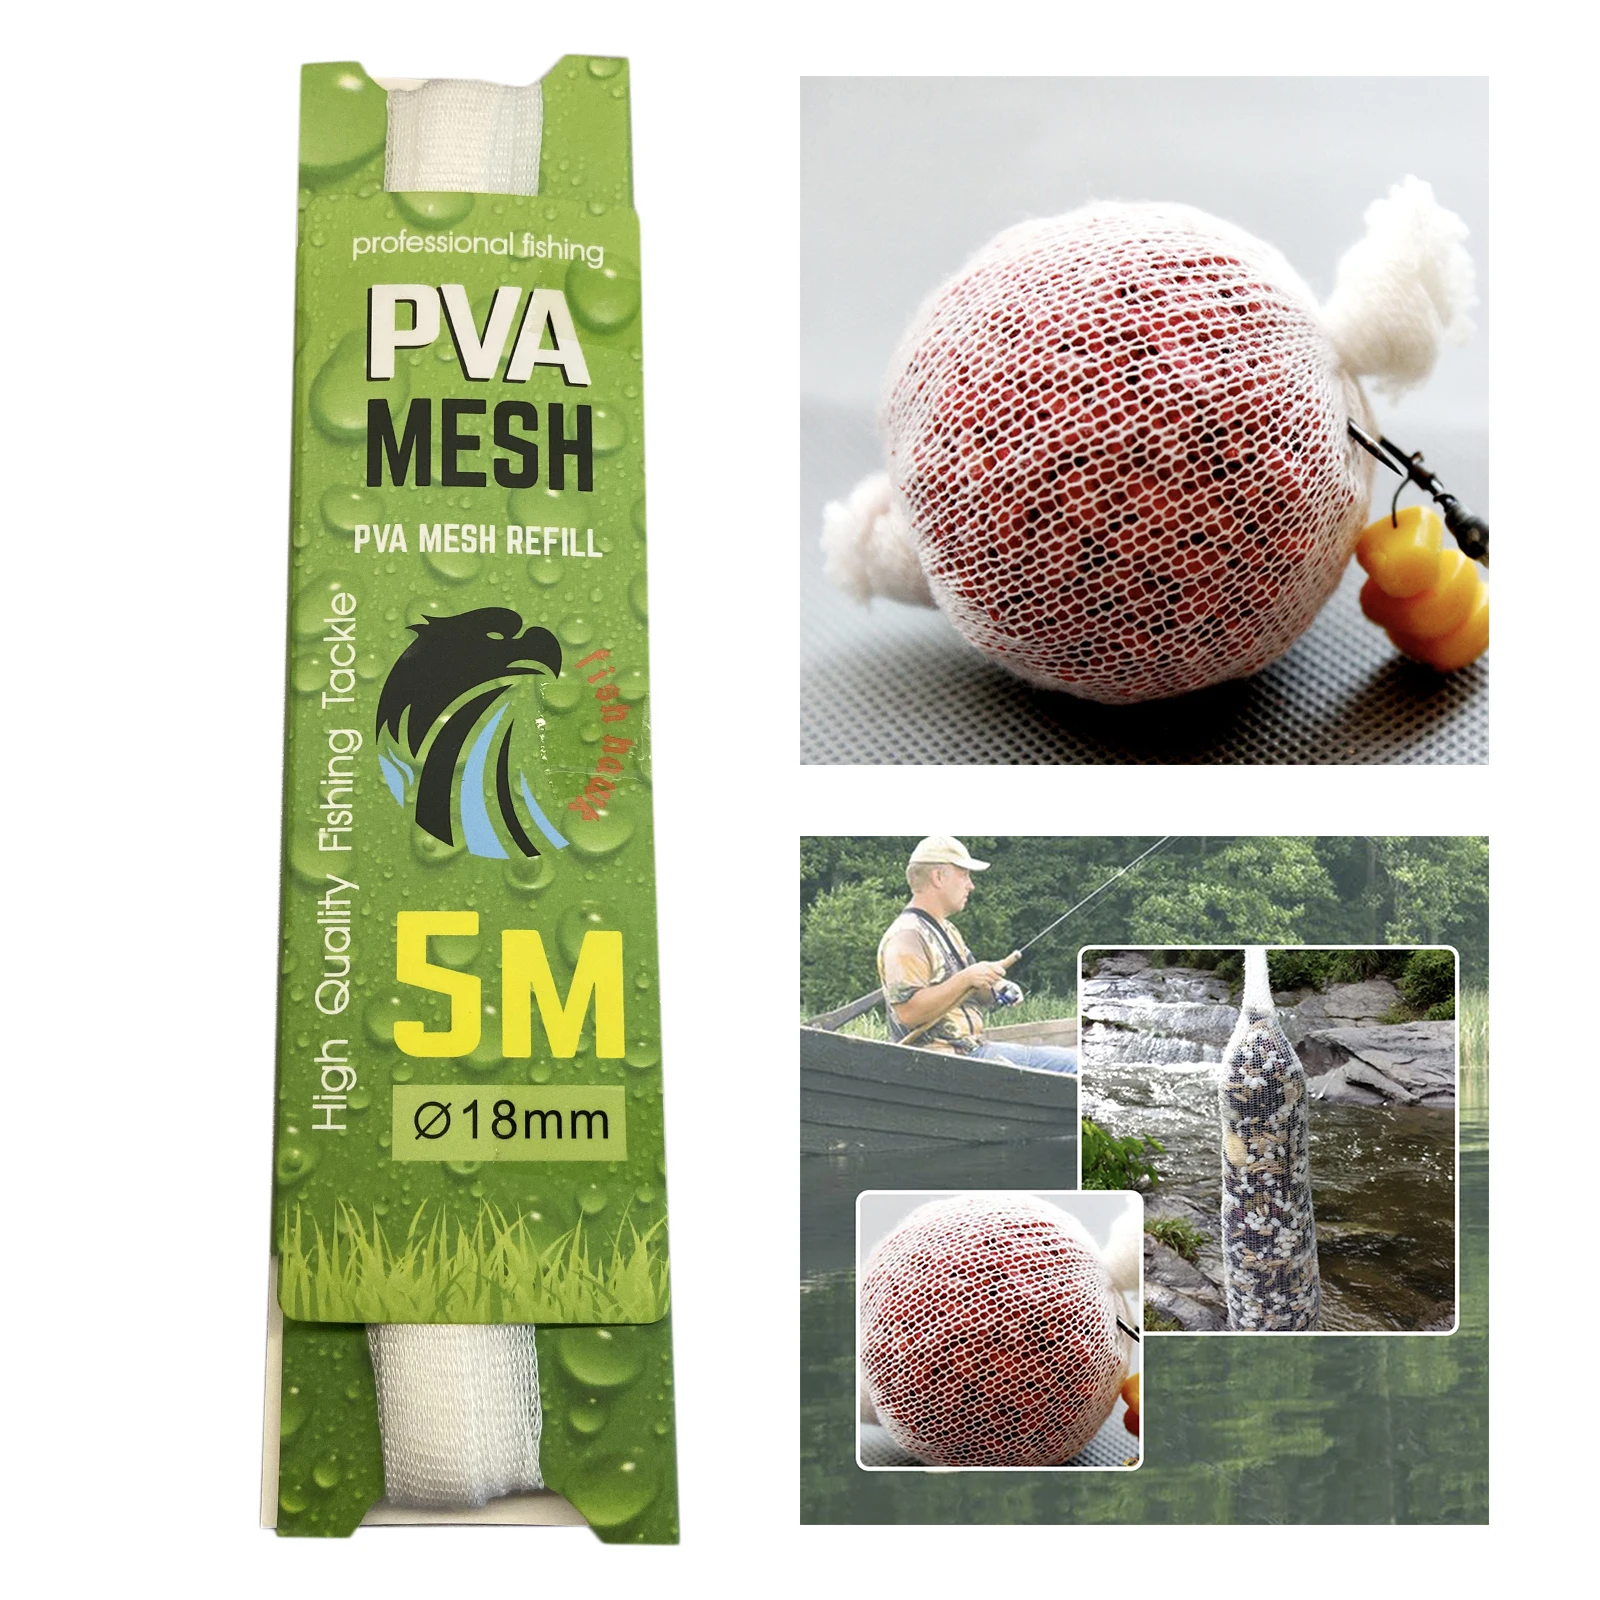 PVA Fishing Bait Bag Fishing Lure Water Soluble Mesh Tube Tackles